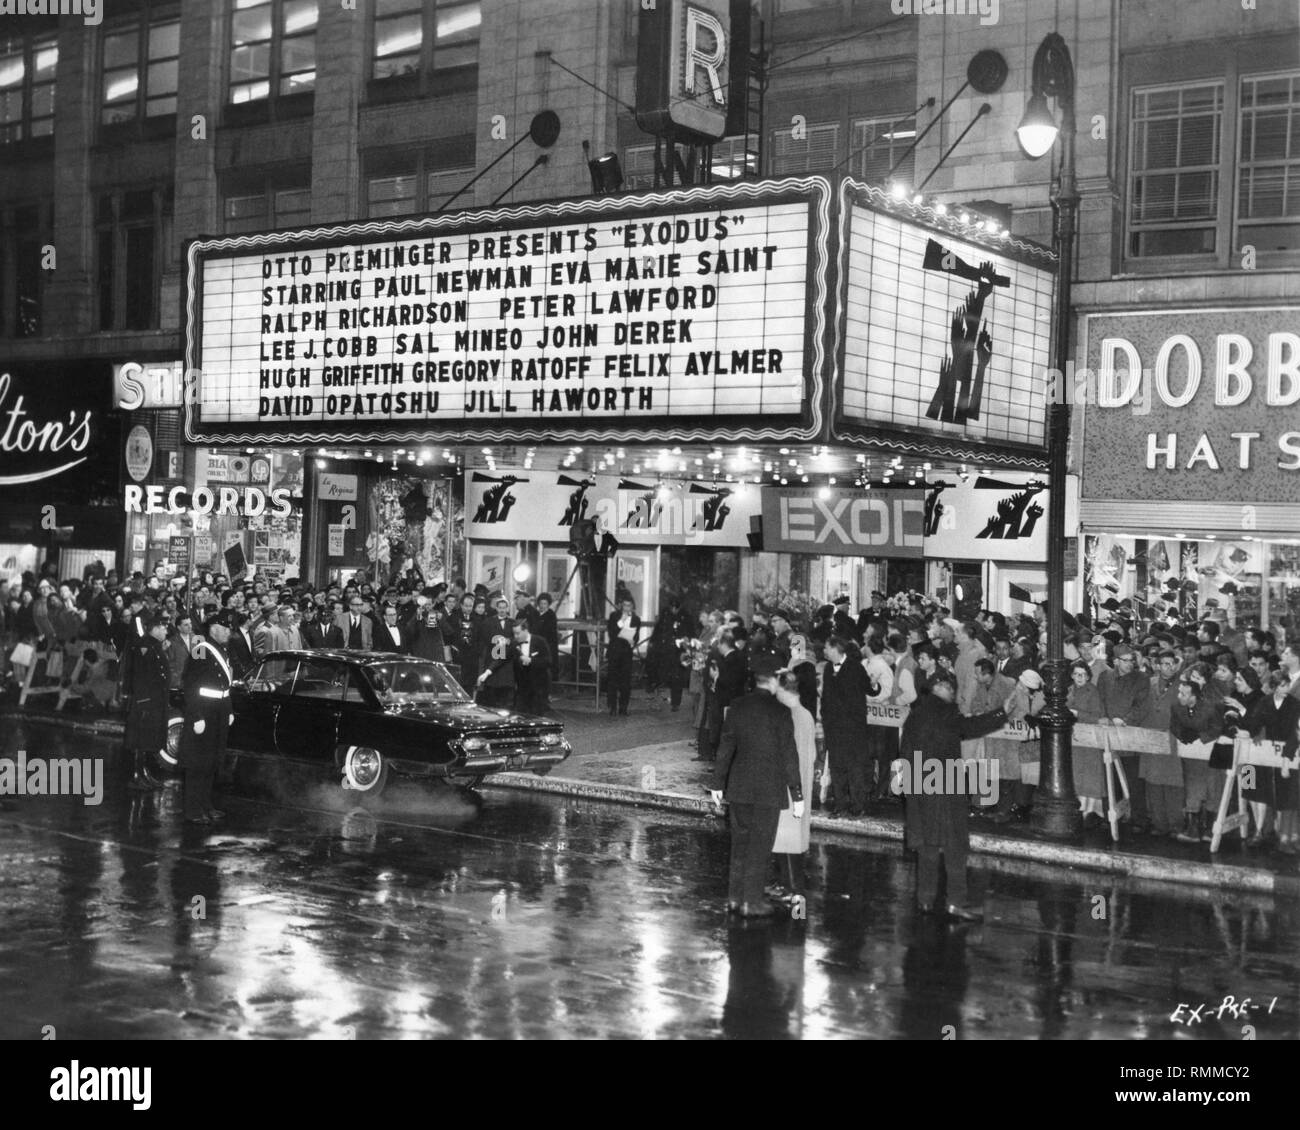 EXODUS 1960 New York Premiere December 15 1960 Movie Theater Theatre Cinema  Starring Paul Newman Eva Marie Saint Ralph Richardson Peter Lawford Sal  Mineo directed by Otto Preminger screenplay Dalton Trumbo from